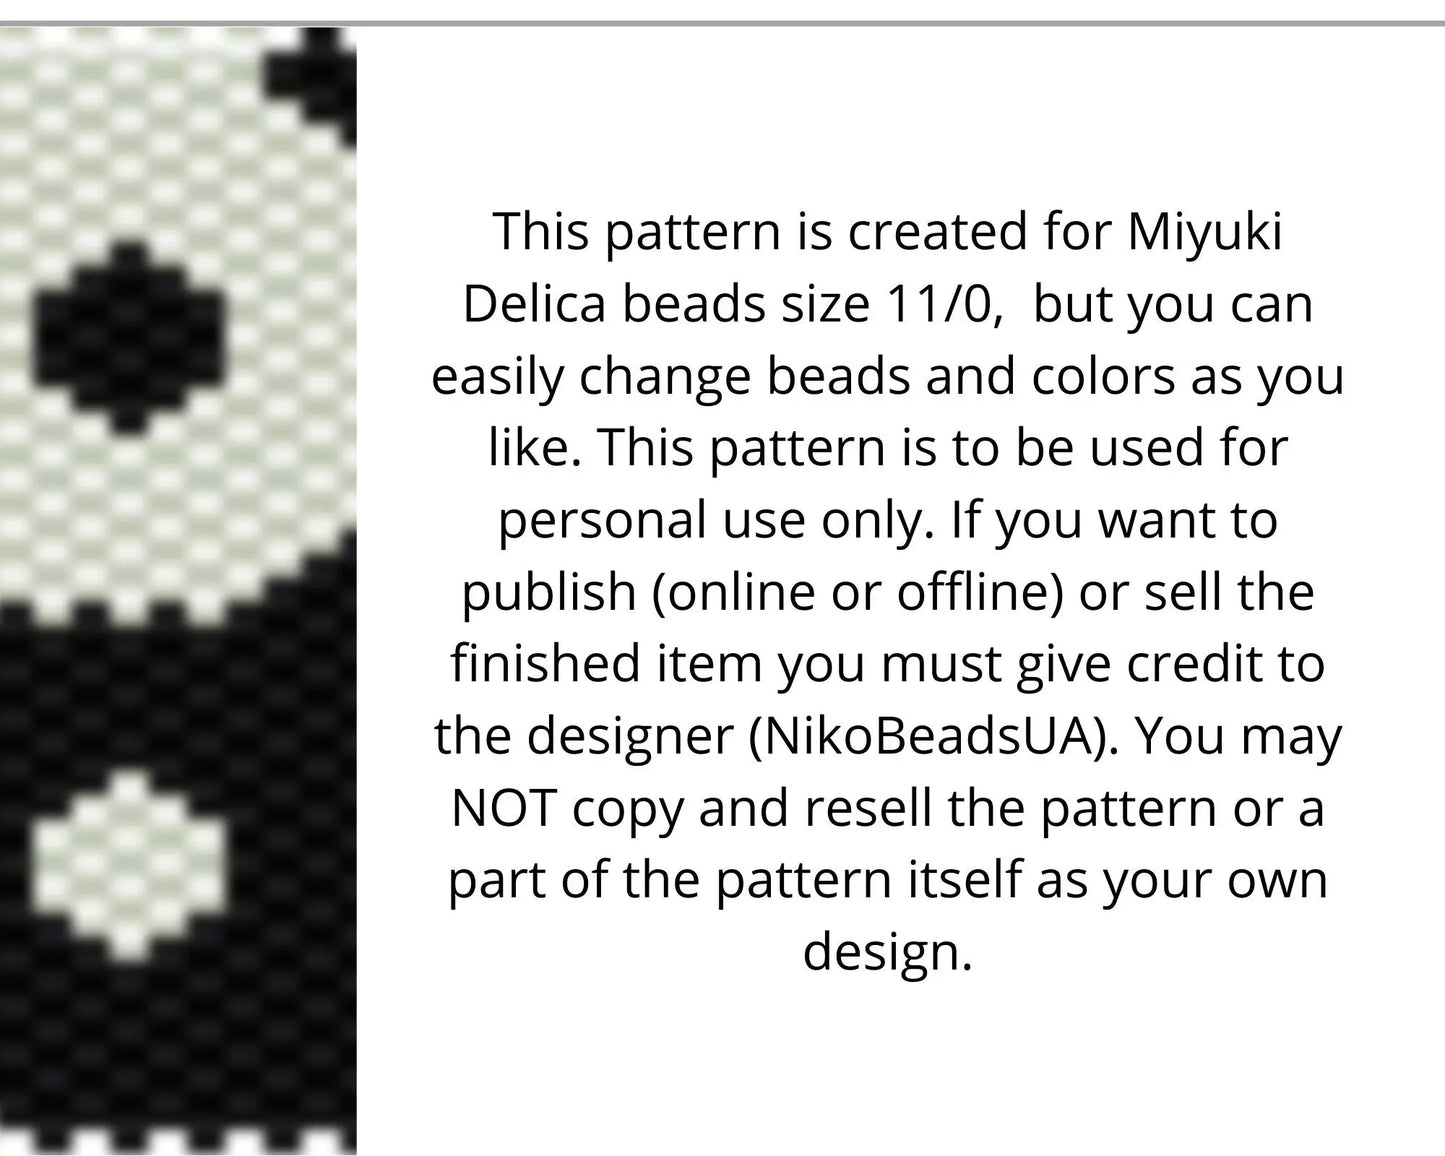 Yin Yang Brick Stitch pattern for beaded pendant and earrings NikoBeadsUA